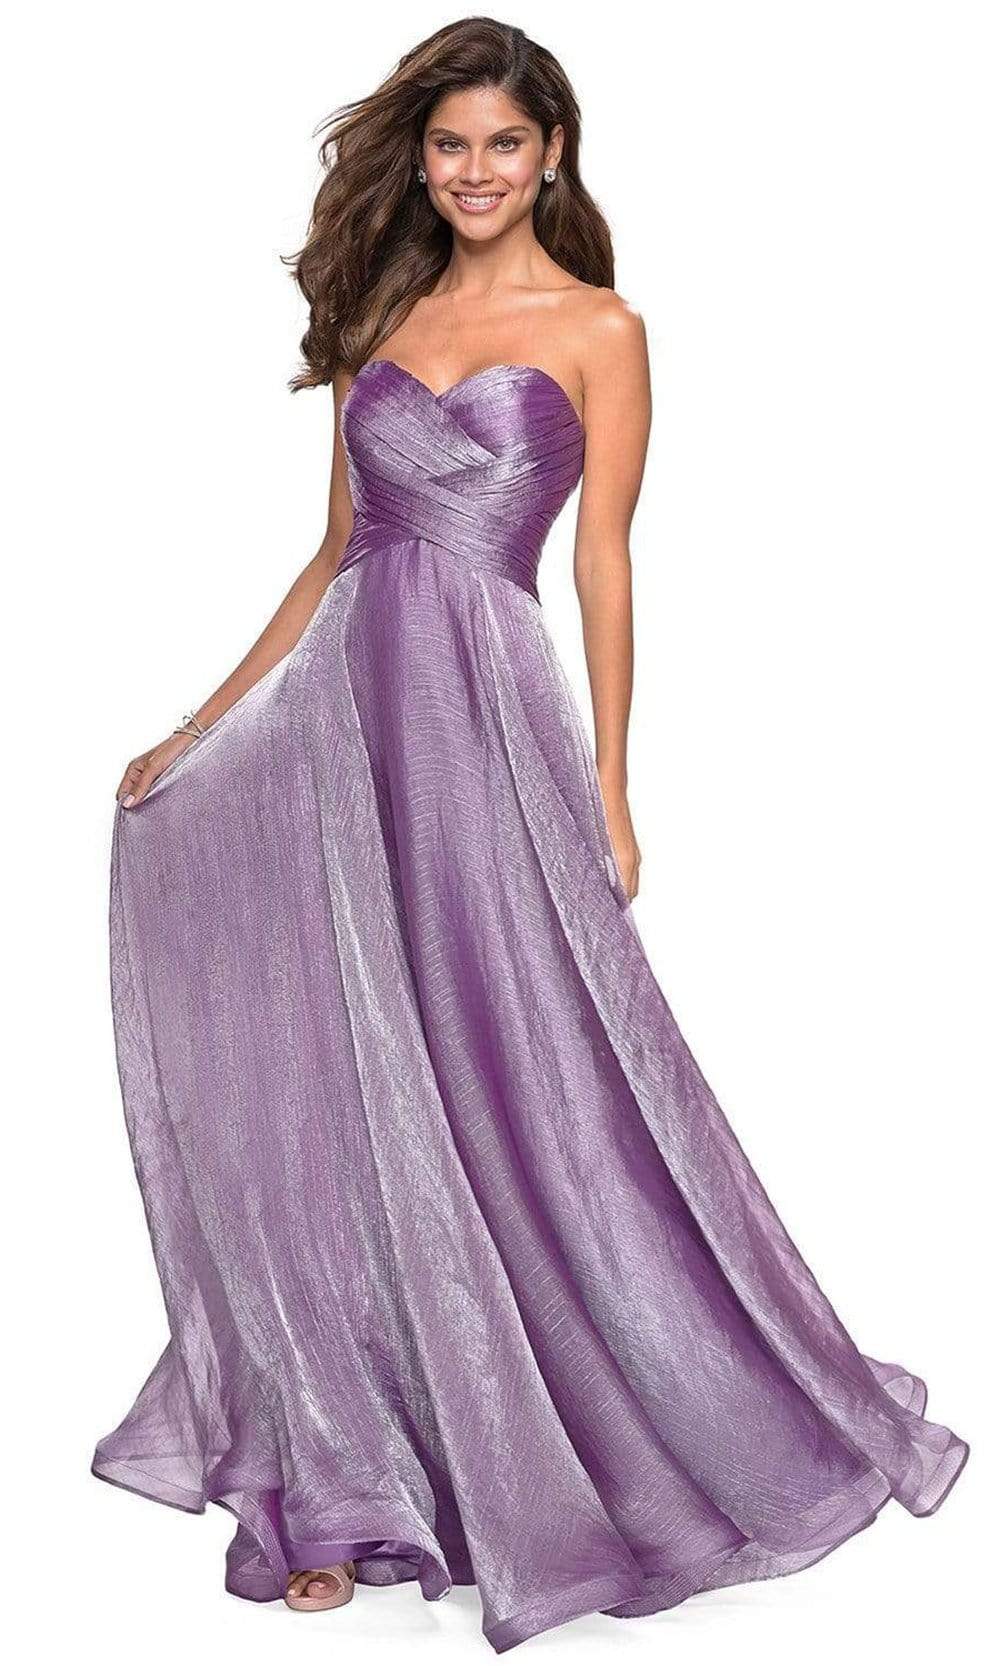 La Femme - 27515 Strapless Sweetheart Metallic Chiffon Prom Dress
